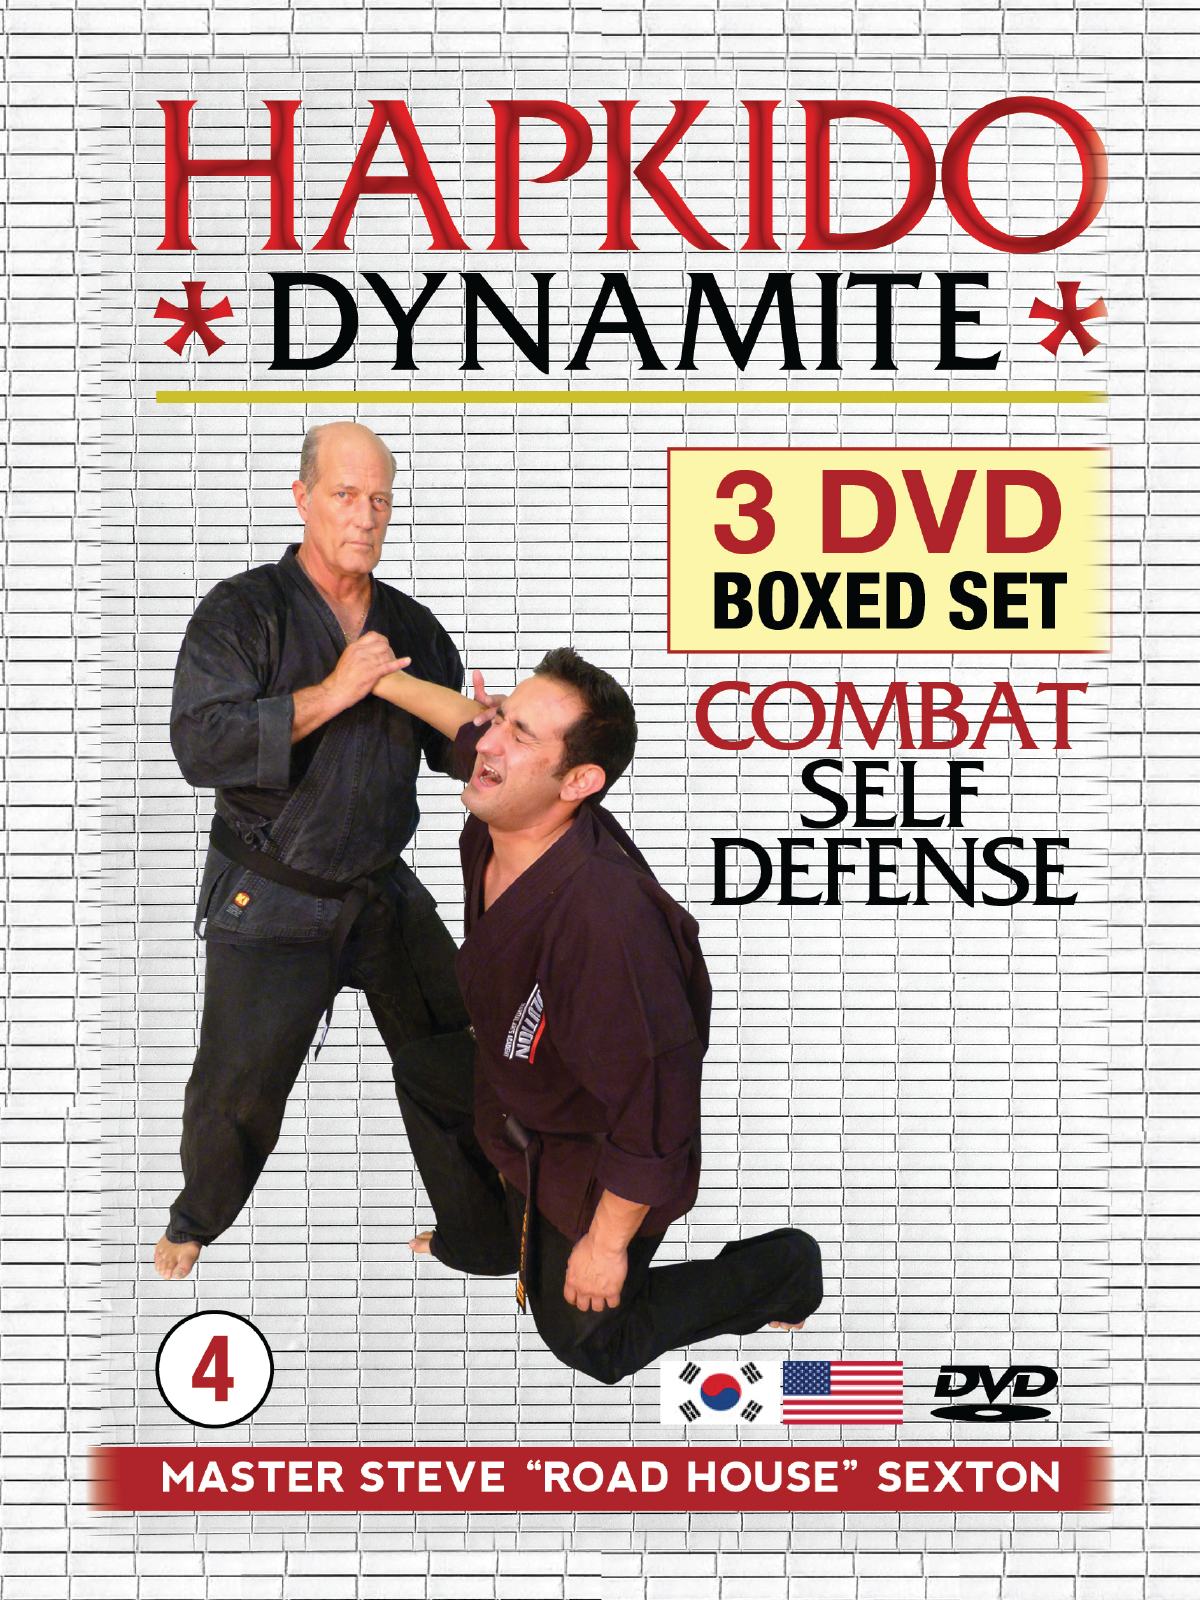 Hapkido Dynamite 3 DVD Set by Steve Roadhouse Sexton